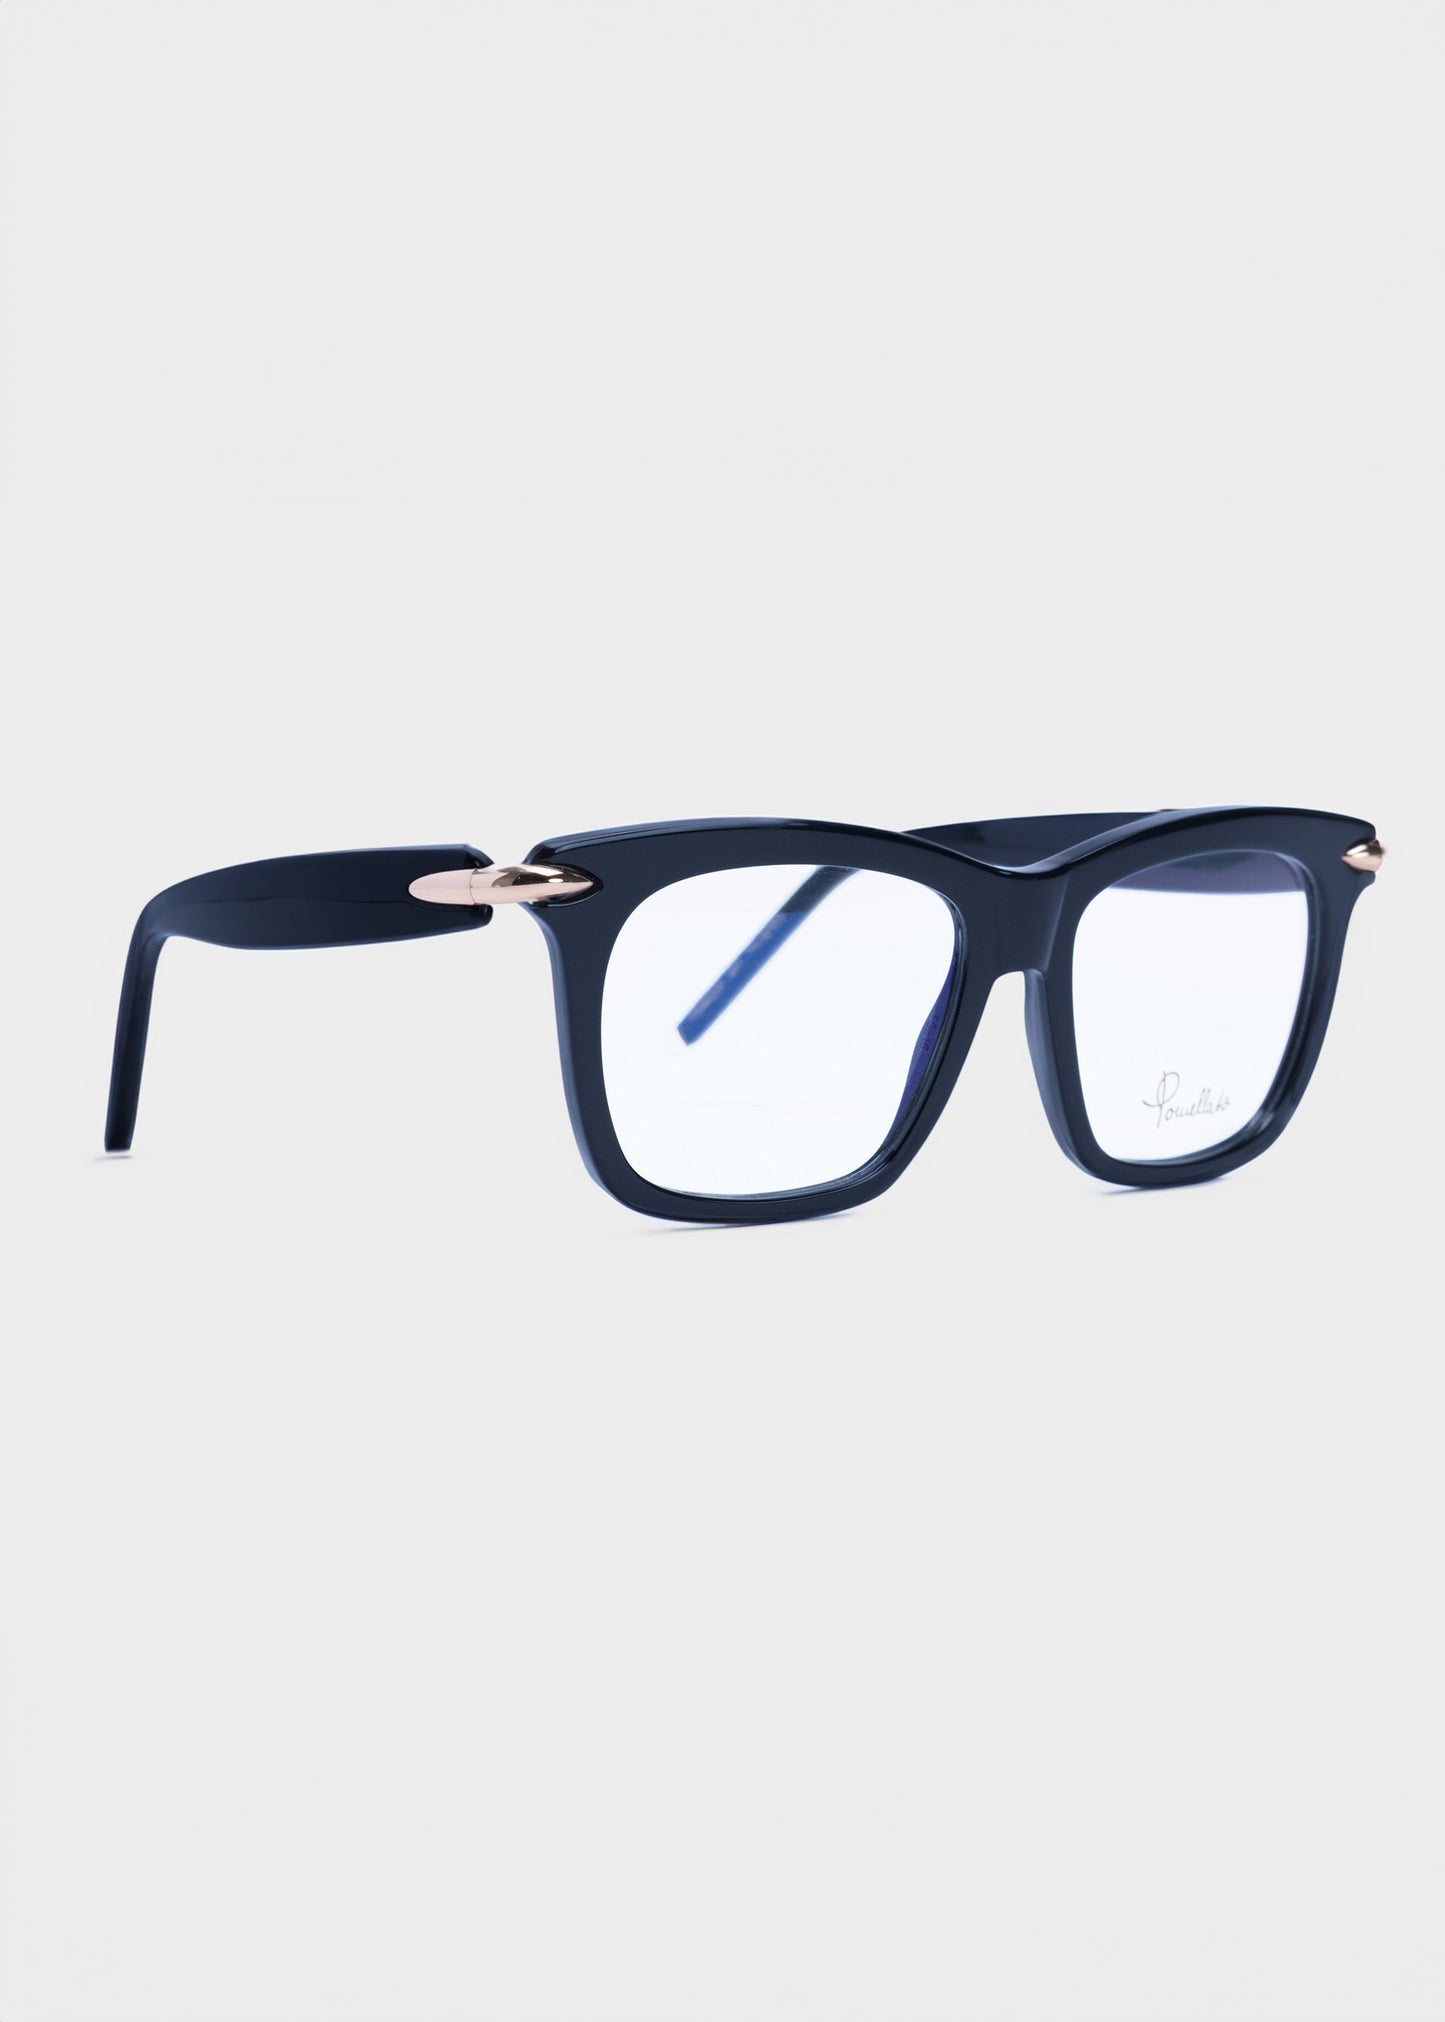 Pomellato Optica Black Eyeglass Frames